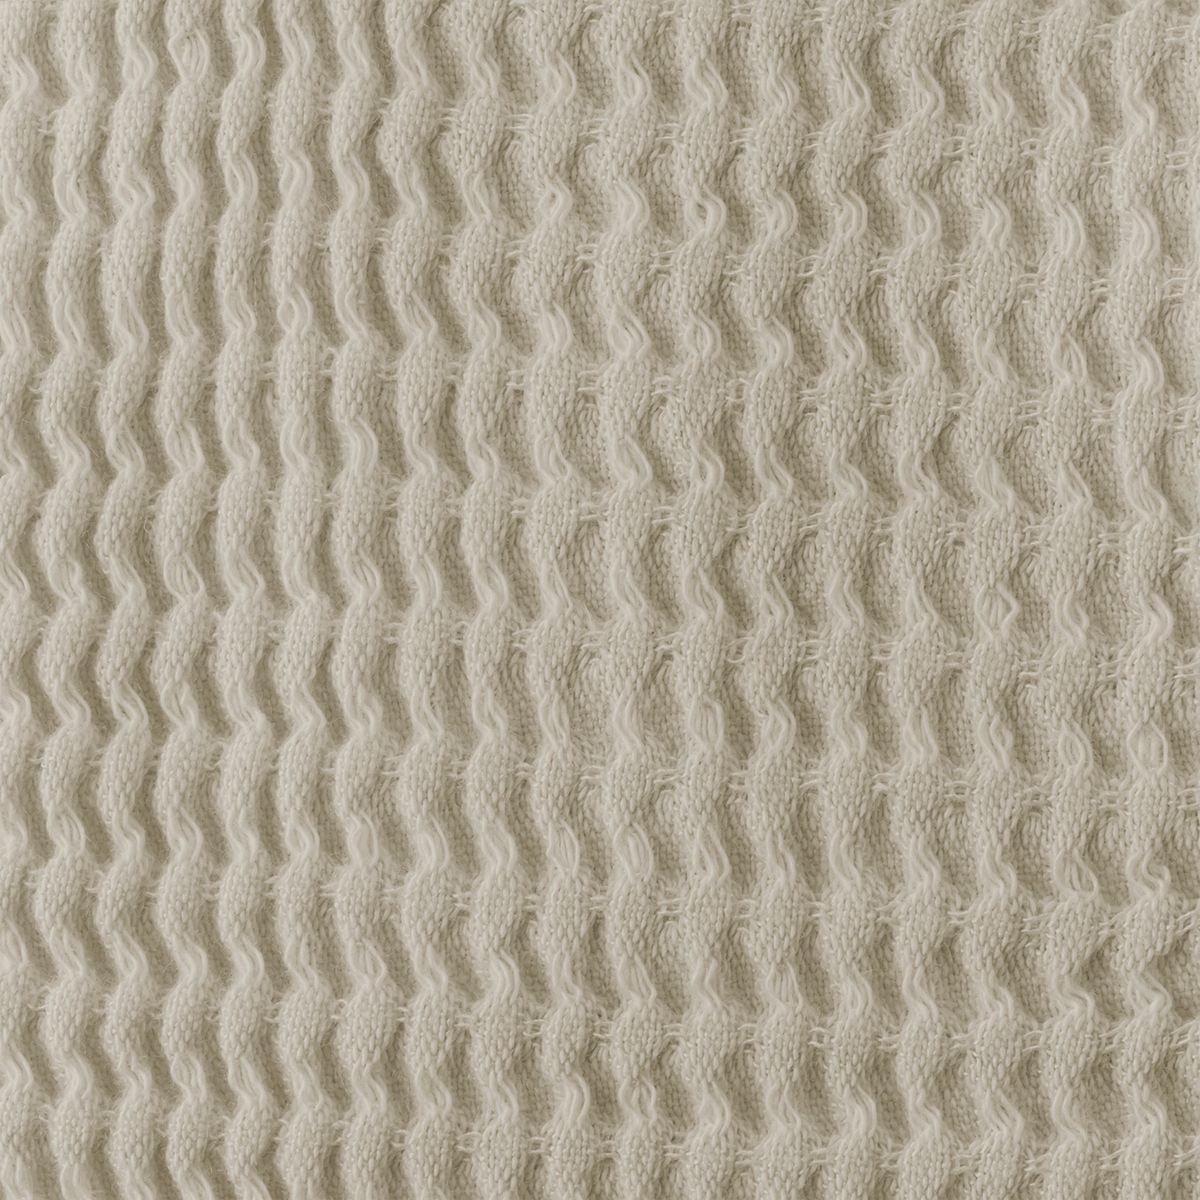 Fabric Closeup of Matouk Kiran Waffle Bath Robe in Dune Color